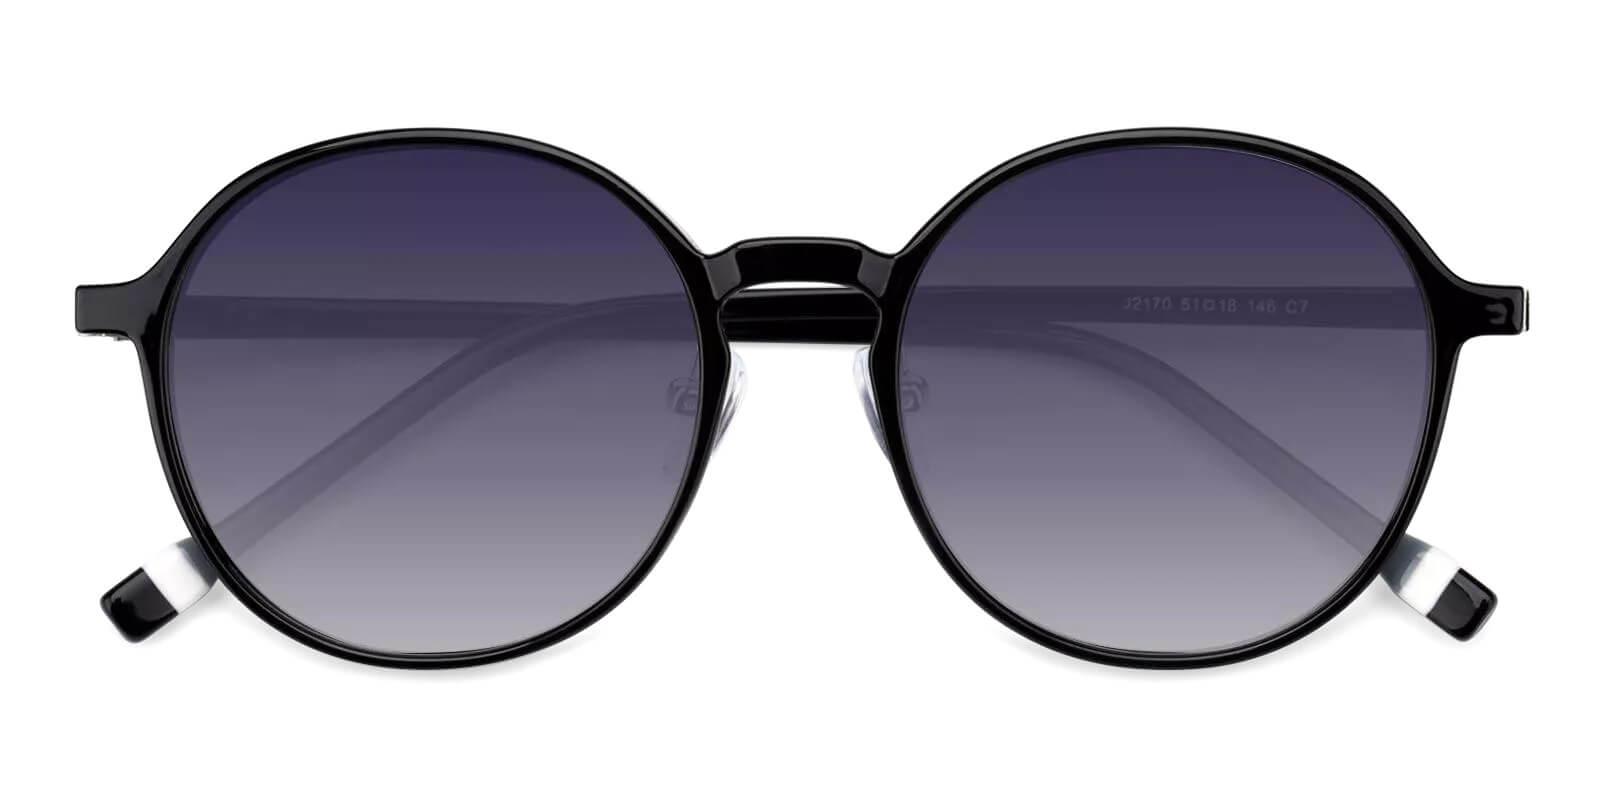 Chai Black TR Fashion , NosePads , Sunglasses Frames from ABBE Glasses